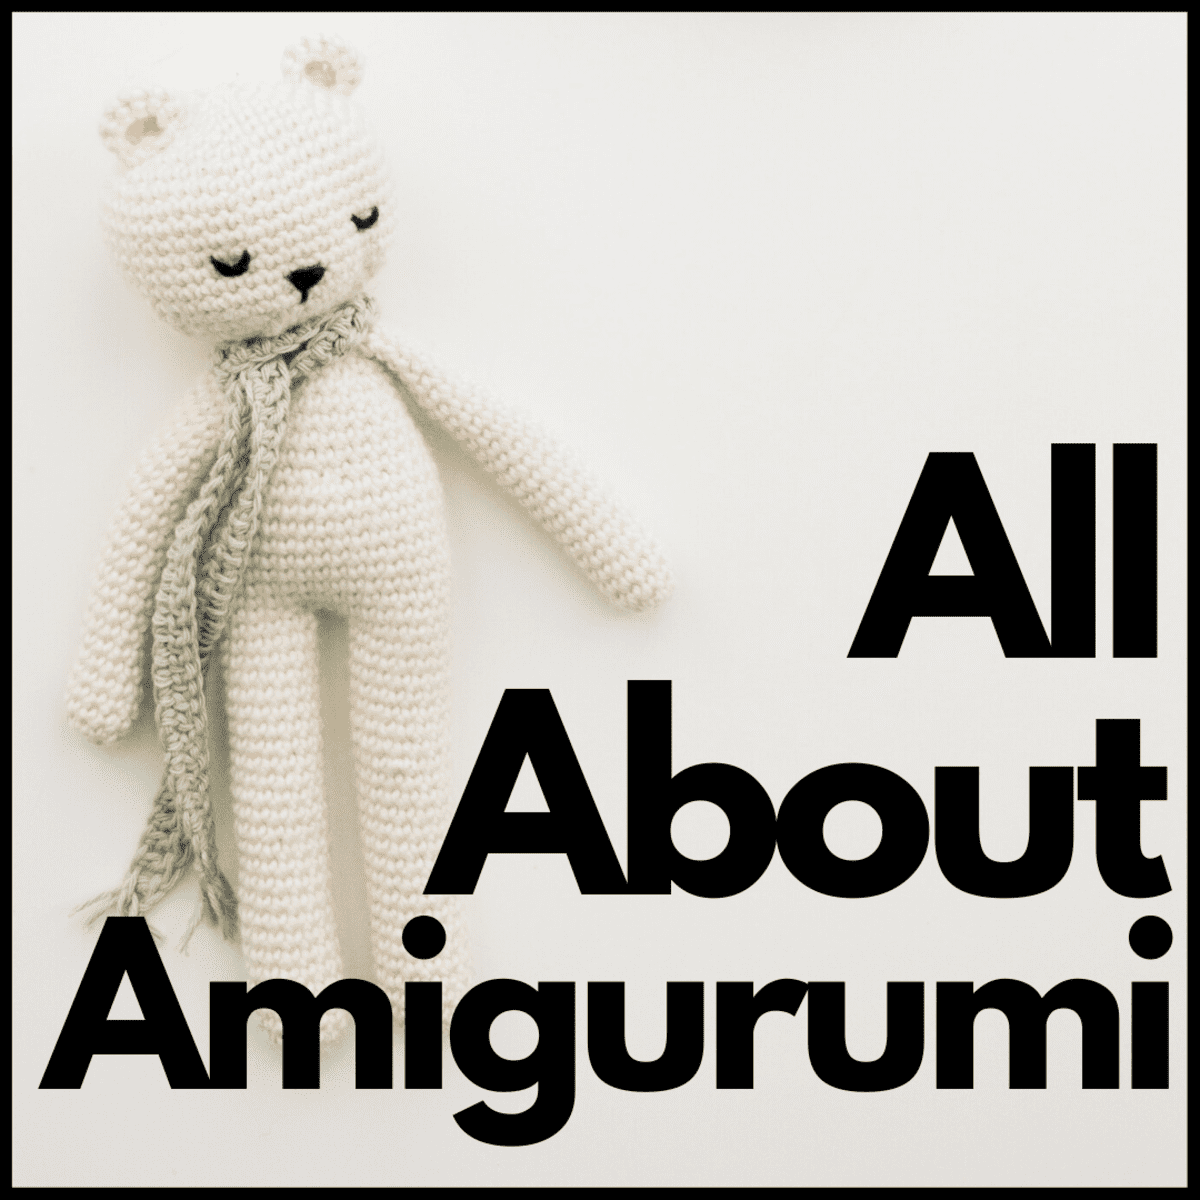 Cute Amigurumi Animals Japanese Crochet-Knitting Craft Book Japan